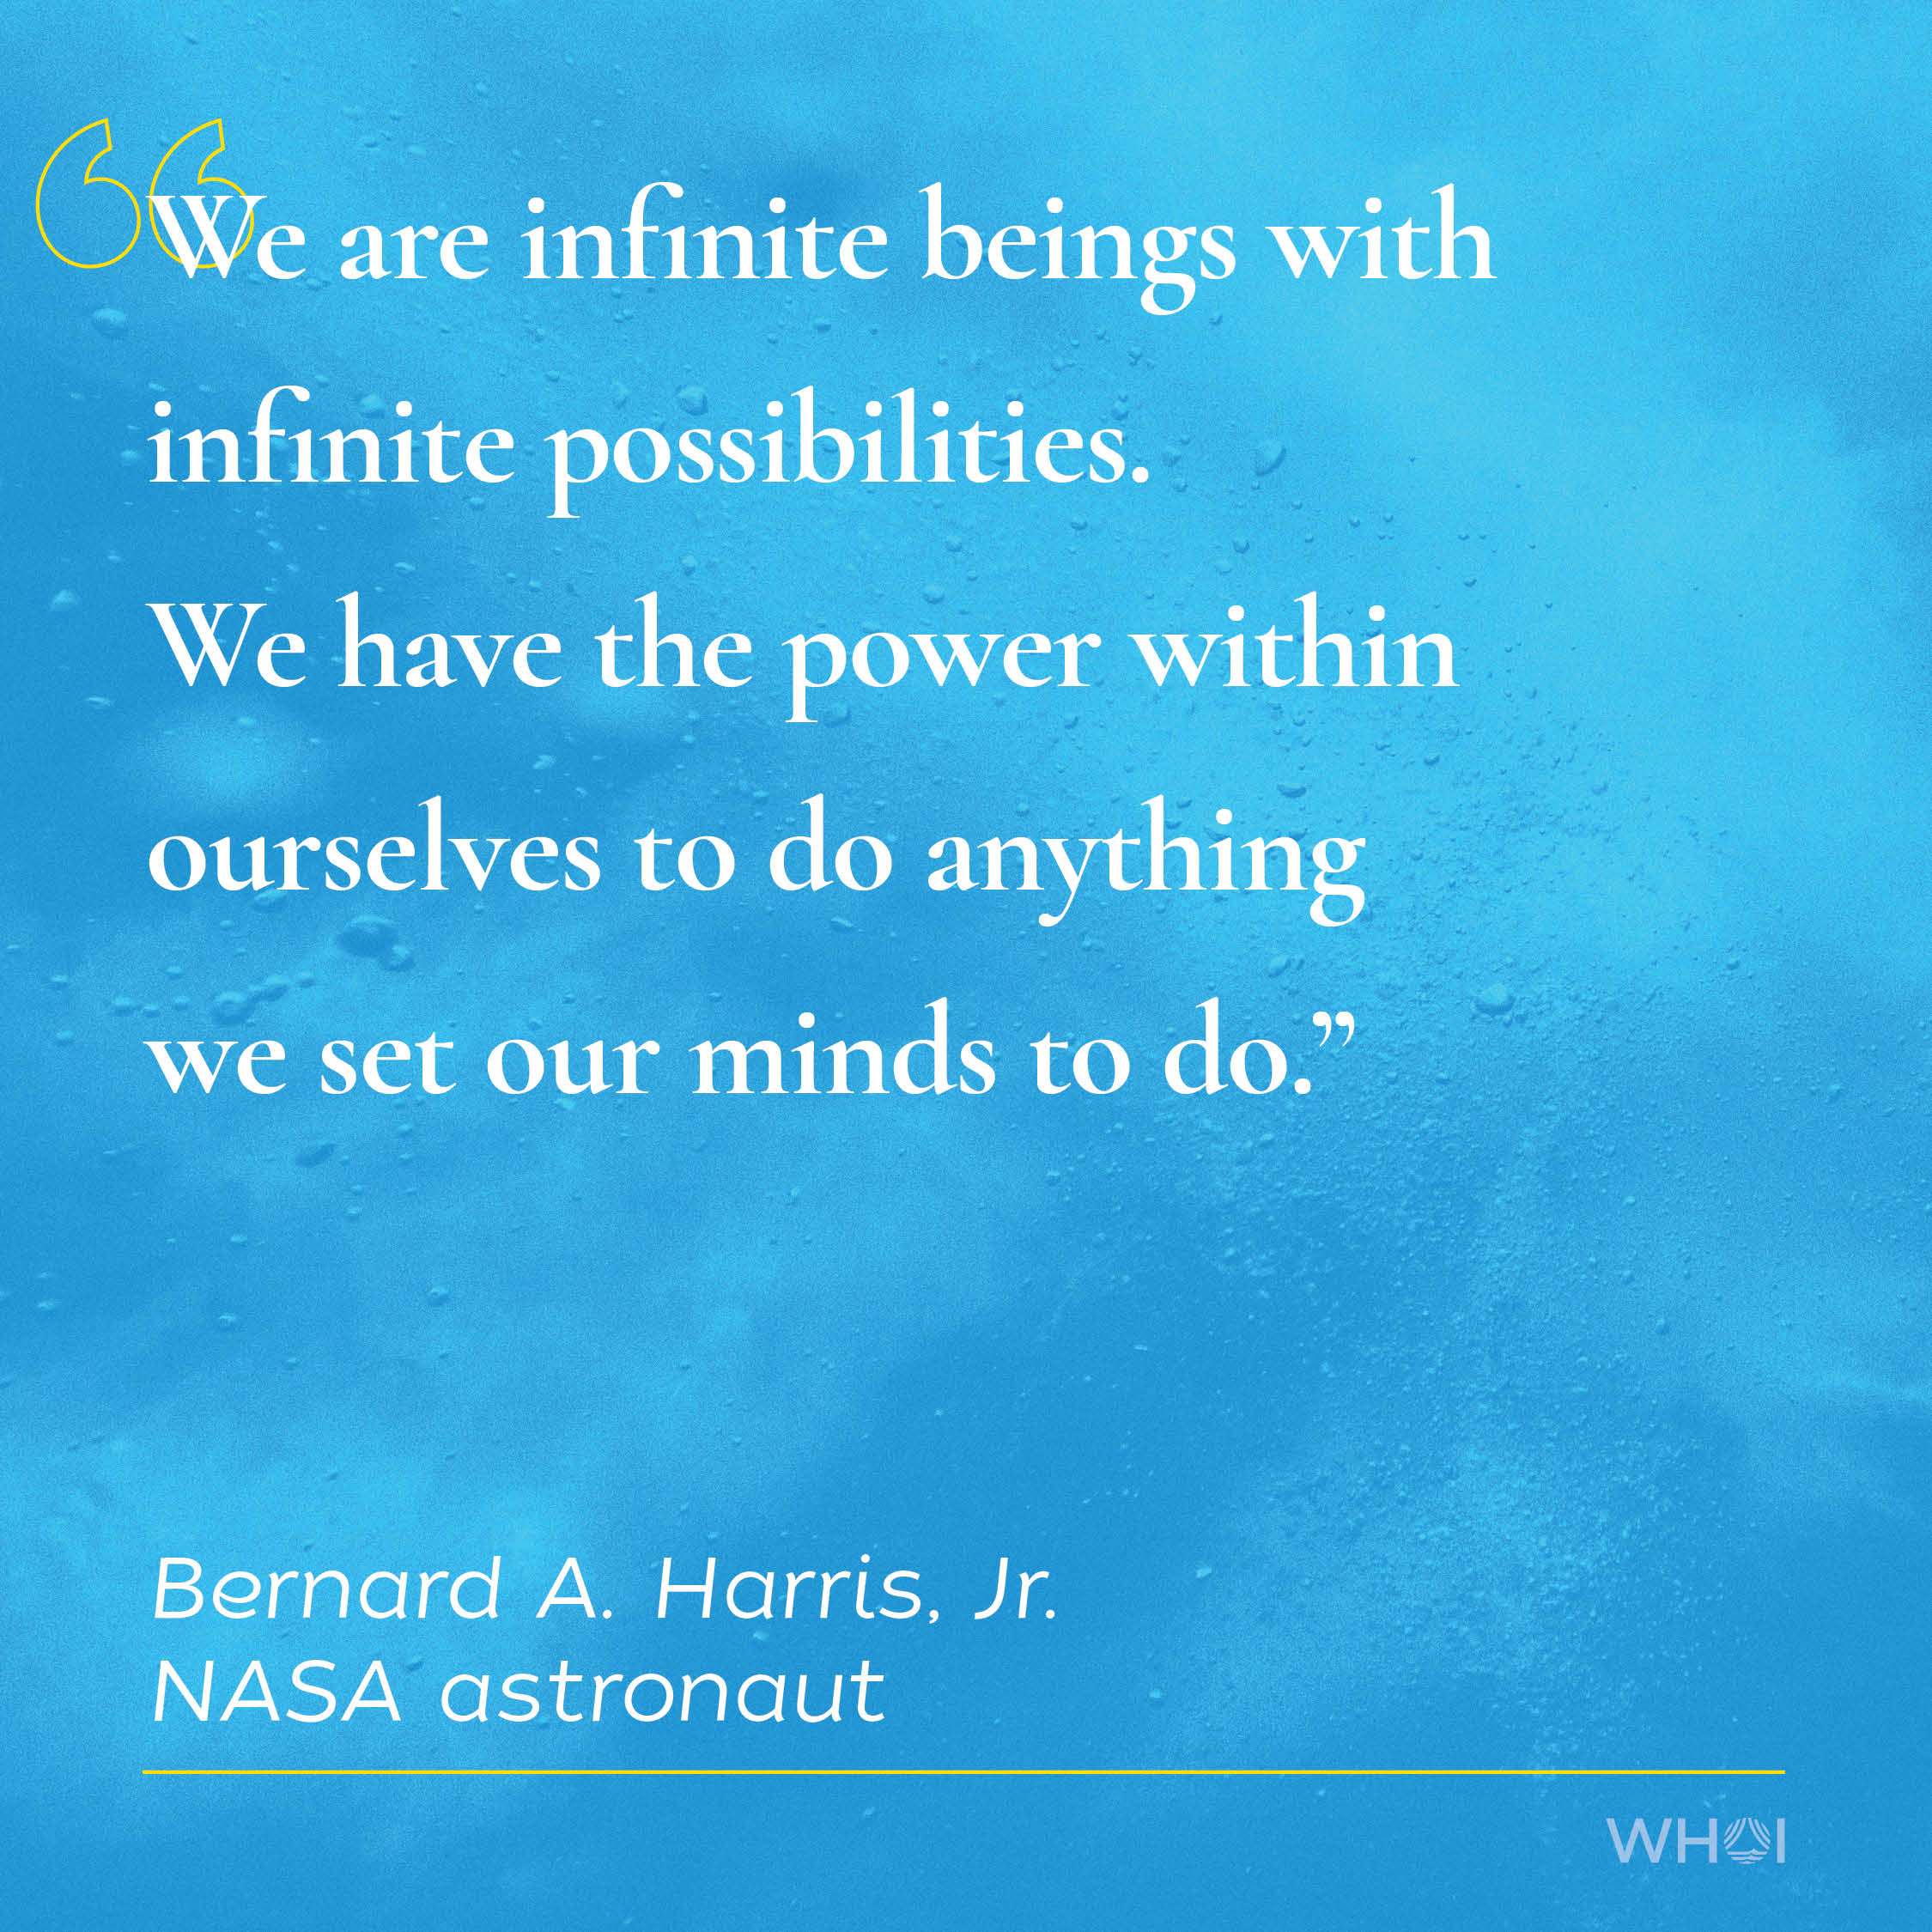 Bernard A. Harris, Jr. Quote